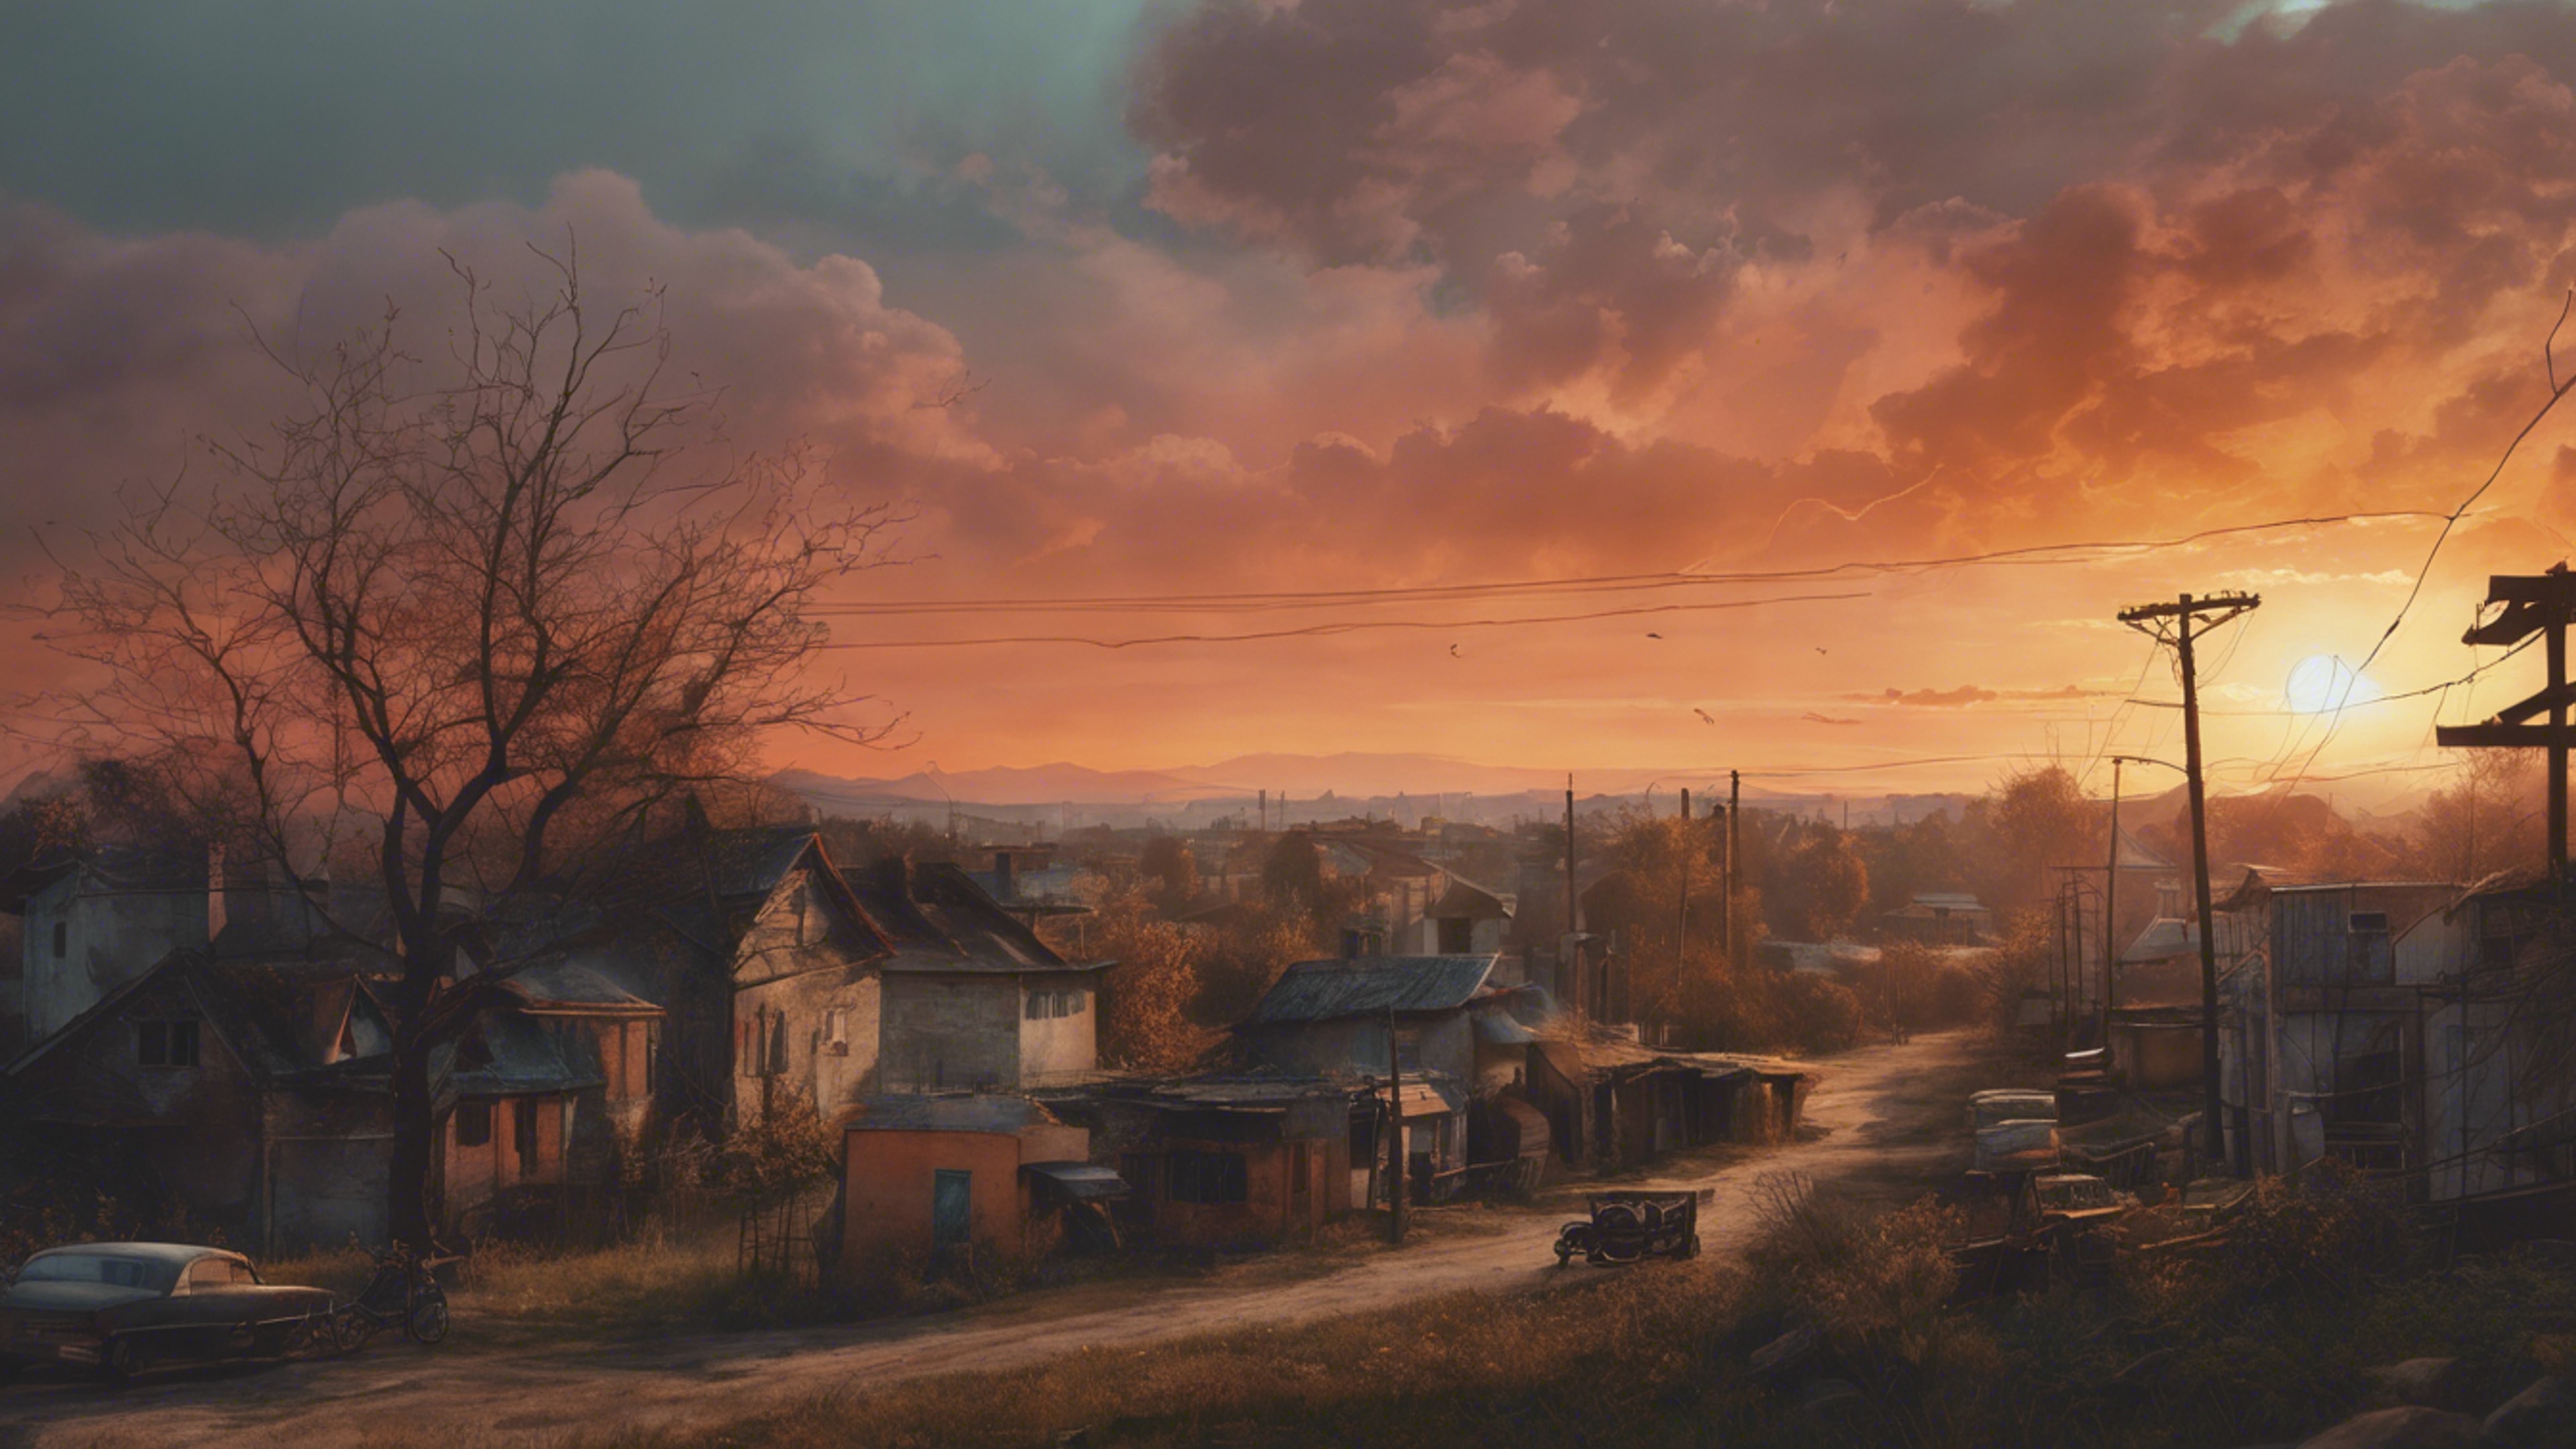 An evocative painting of a nostalgic sunset over a forgotten hometown. ផ្ទាំង​រូបភាព[c4b7fcd1dd4d40f1b7ab]